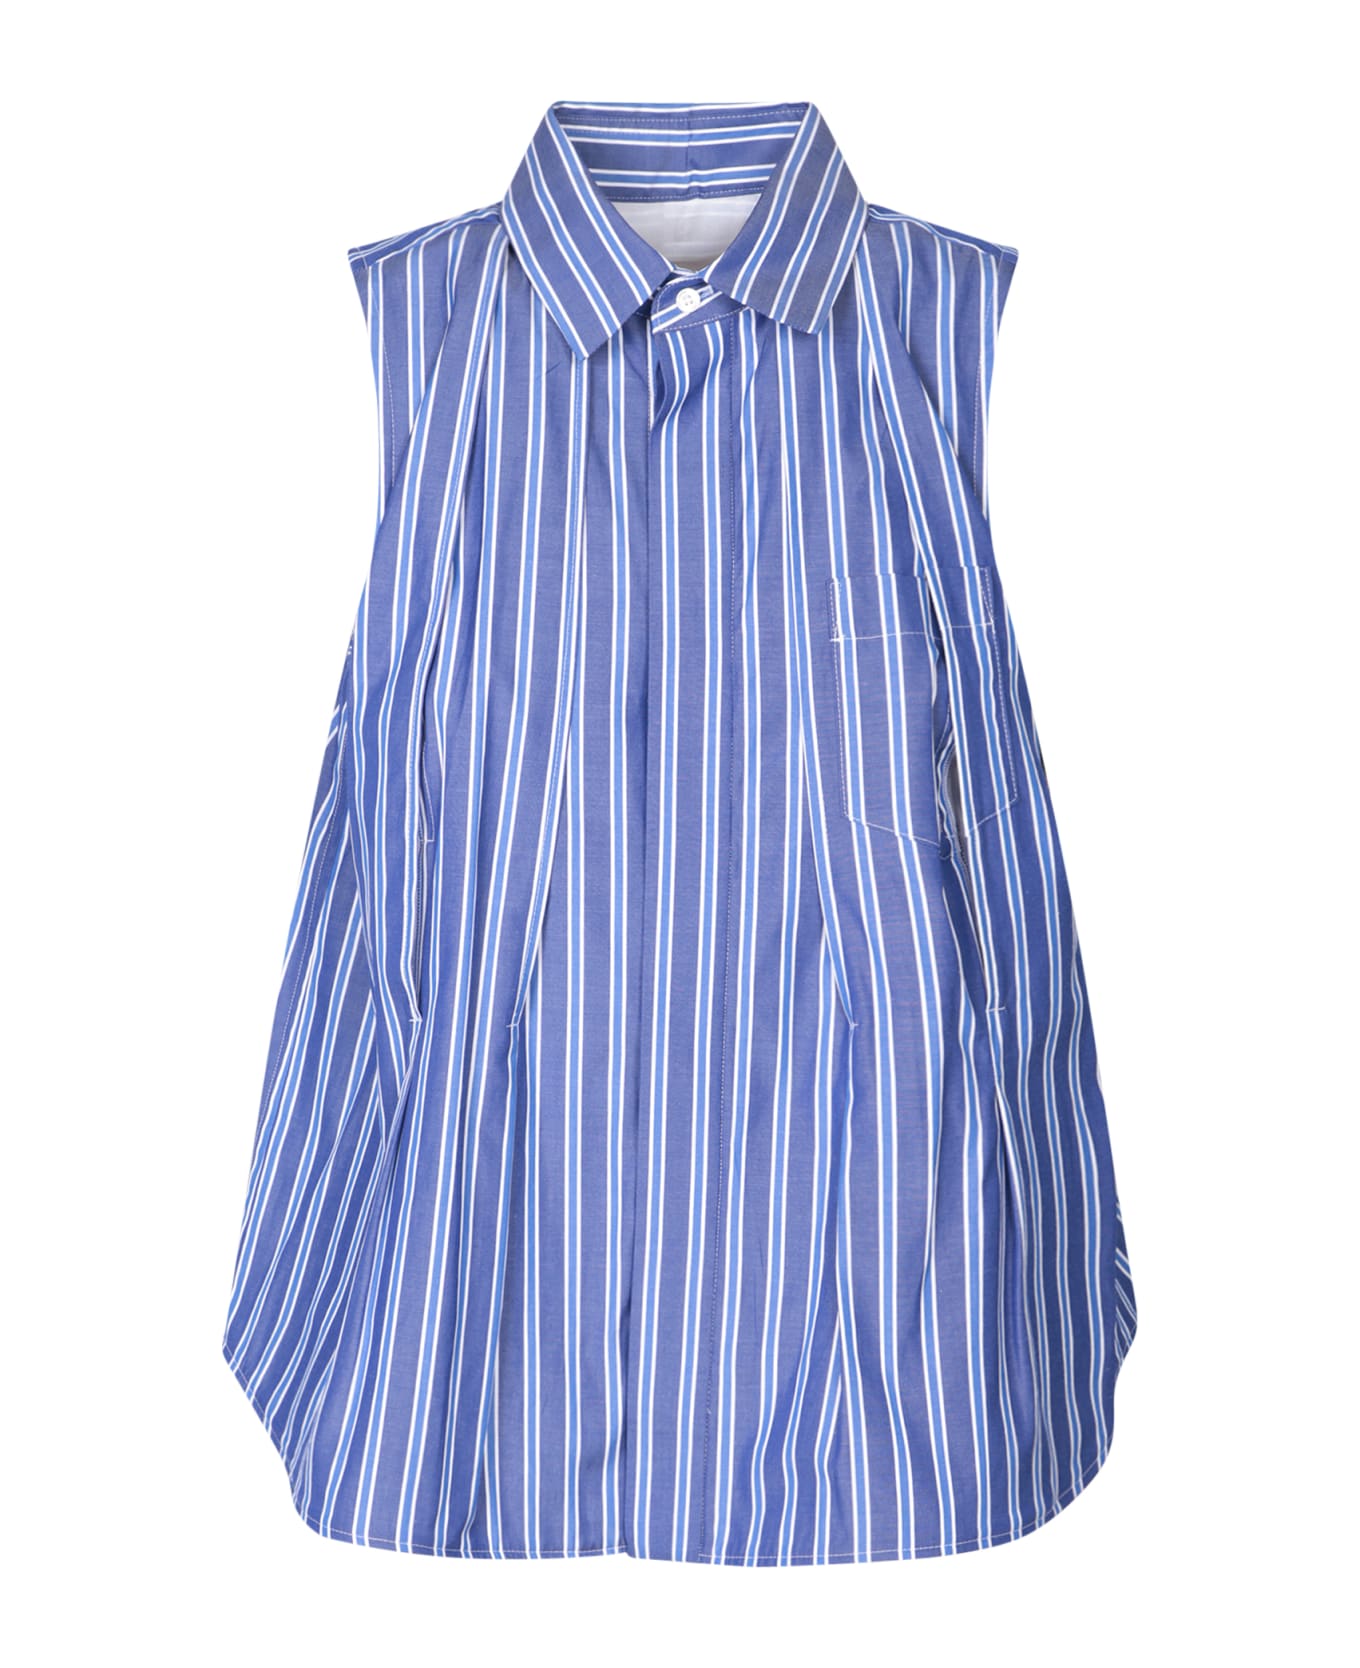 Sacai Sleeveless Shirt In White And Light Blue Stripes - Multi シャツ